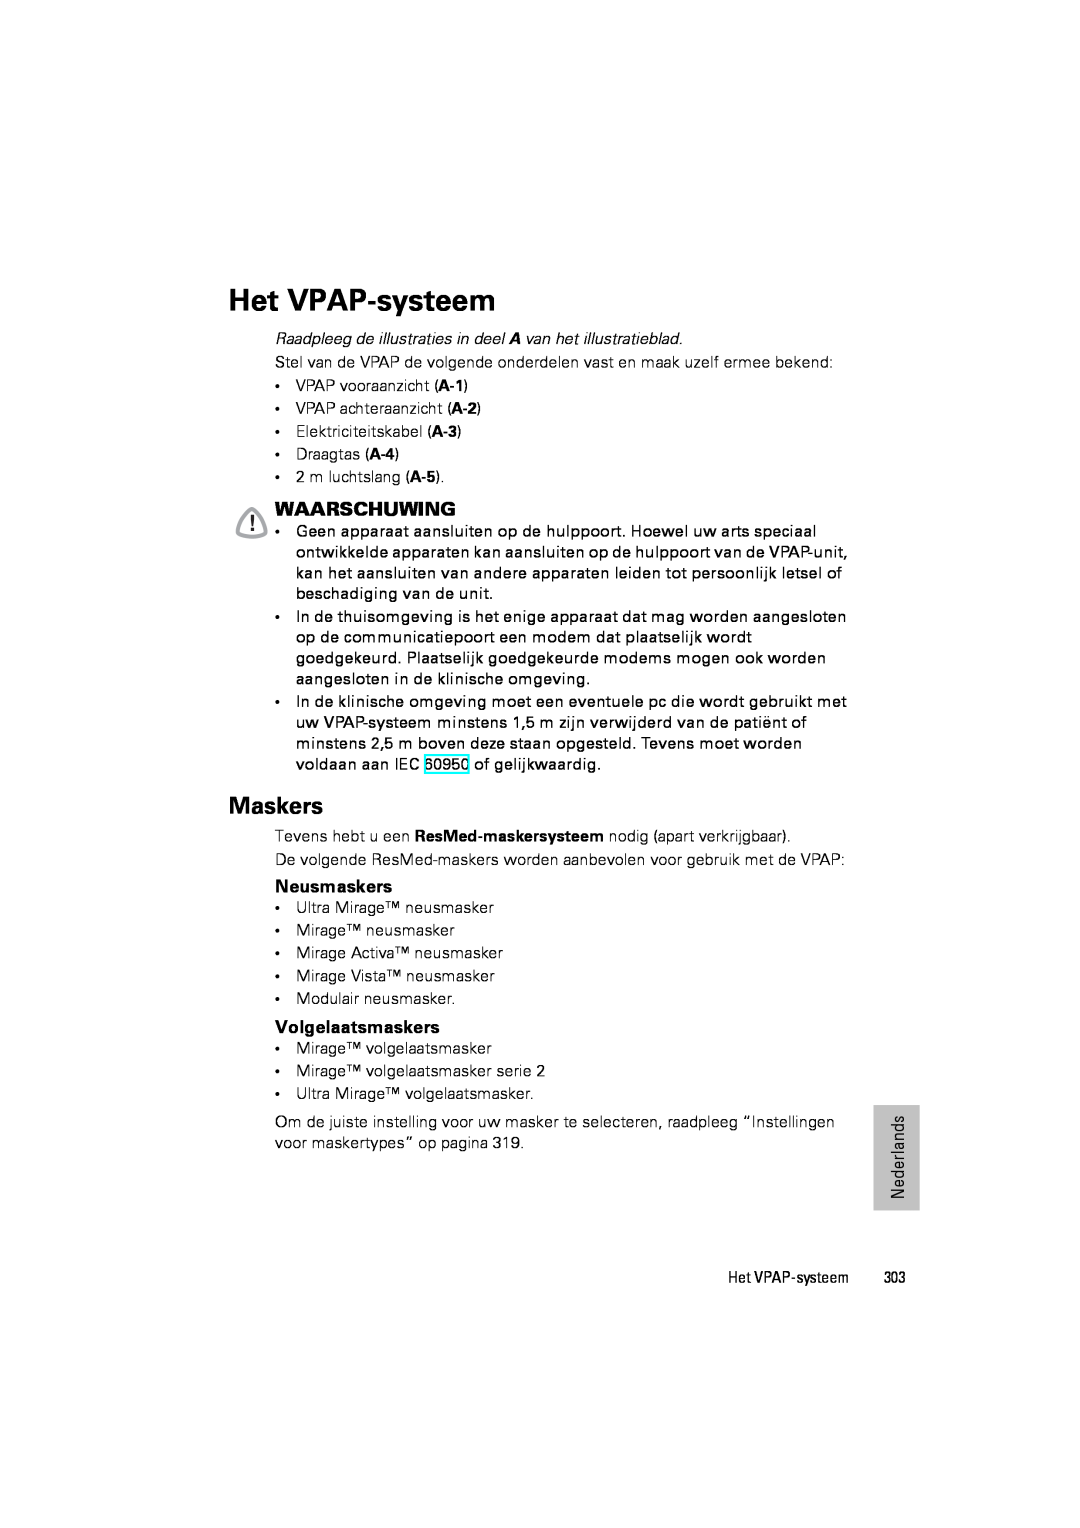 ResMed III & III ST user manual Het VPAP-systeem, Maskers, Waarschuwing, Neusmaskers, Volgelaatsmaskers 